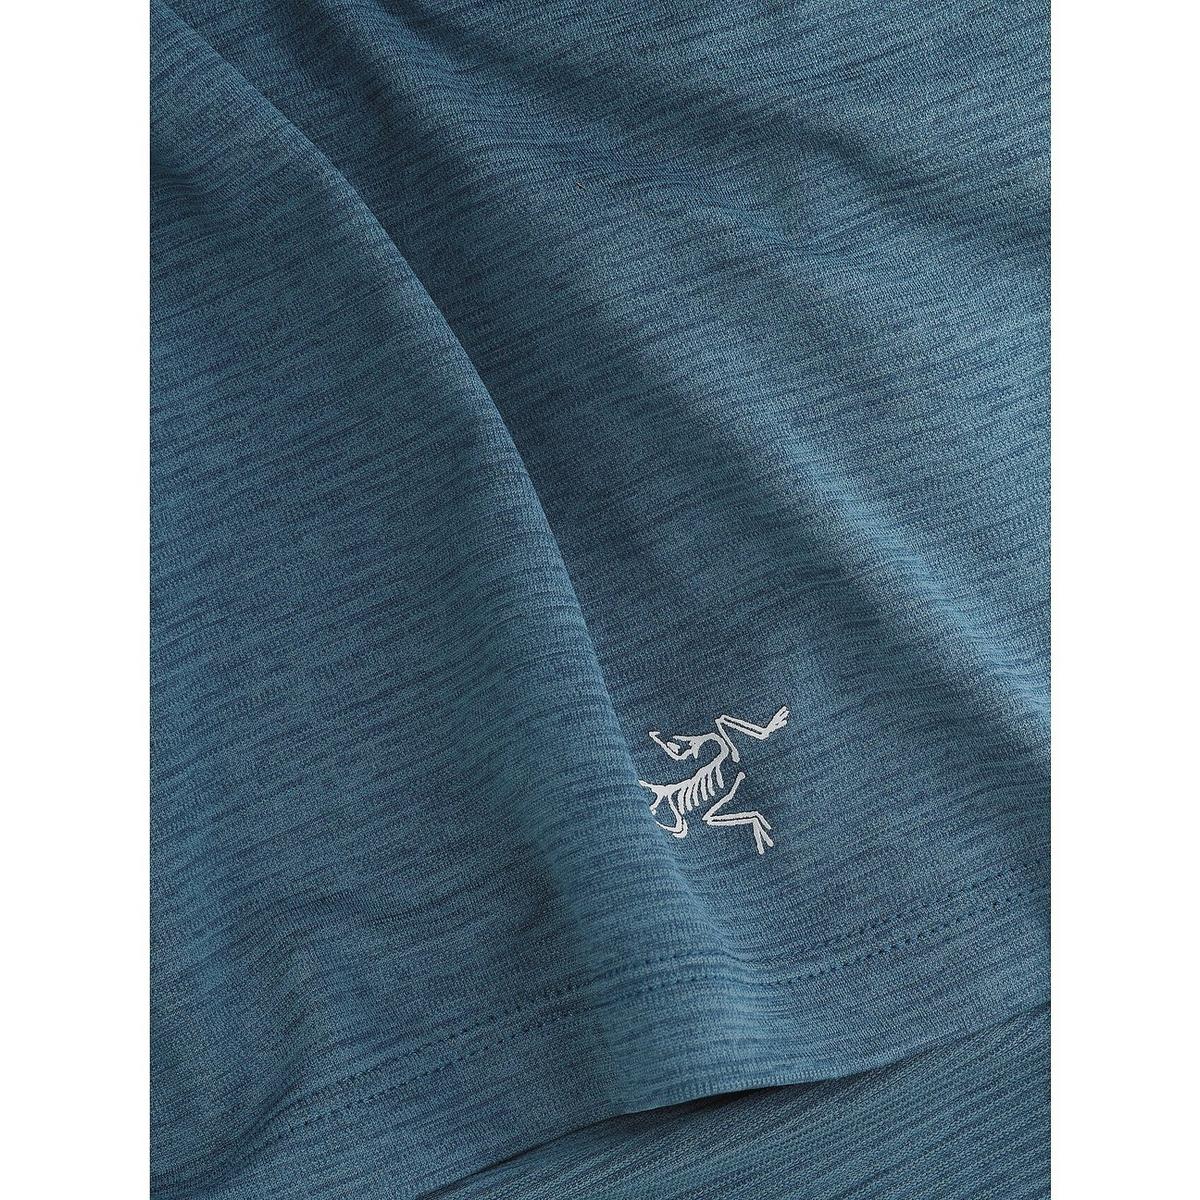 Arcteryx Women's Taema Short Sleeve T-Shirt - Serene/Heather